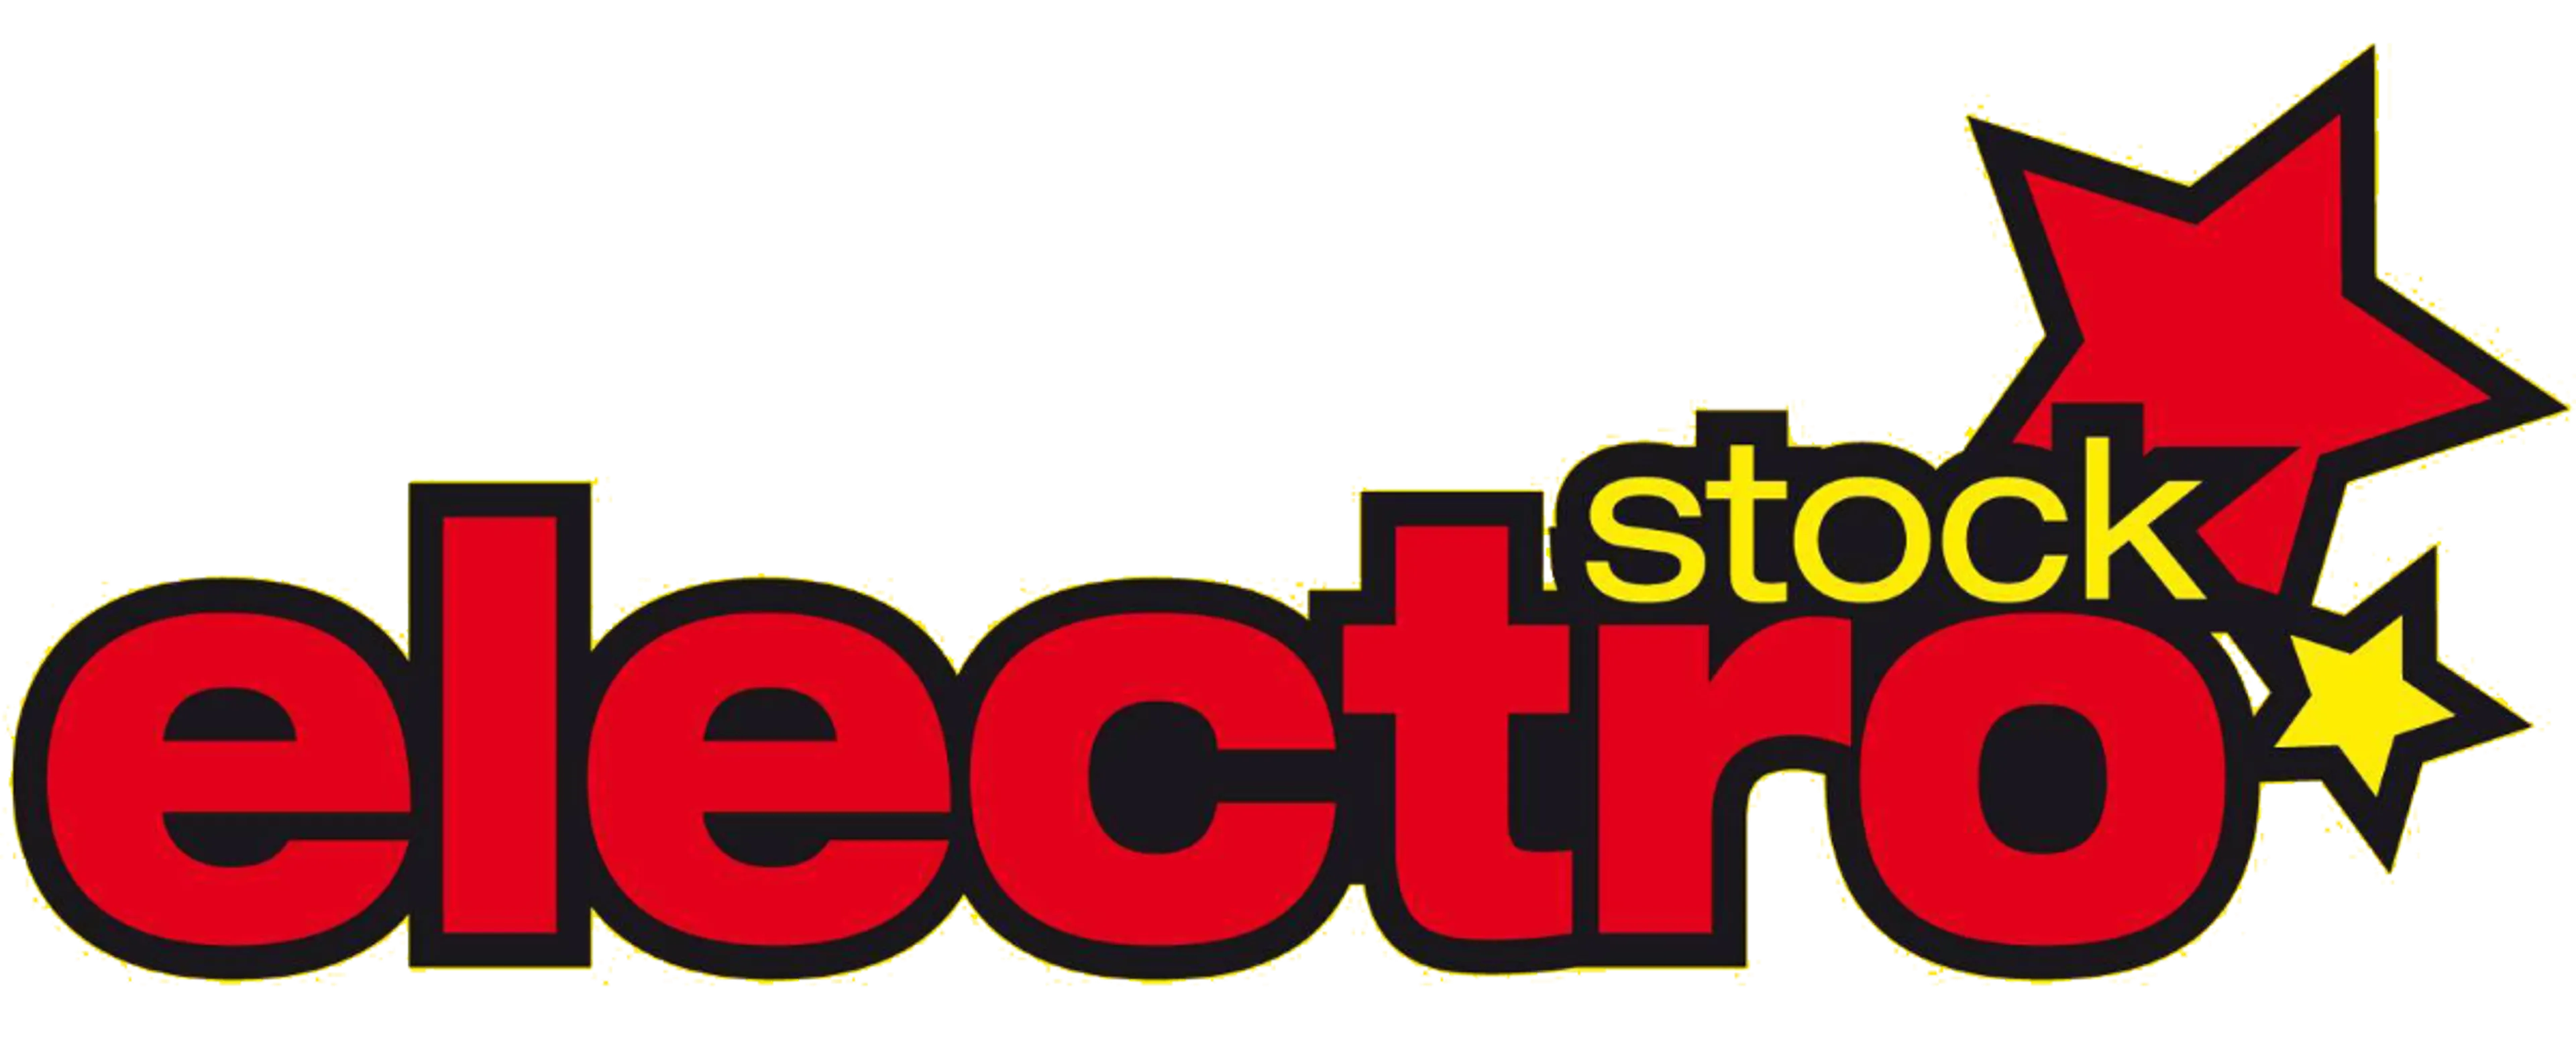 ELECTROSTOCK logo